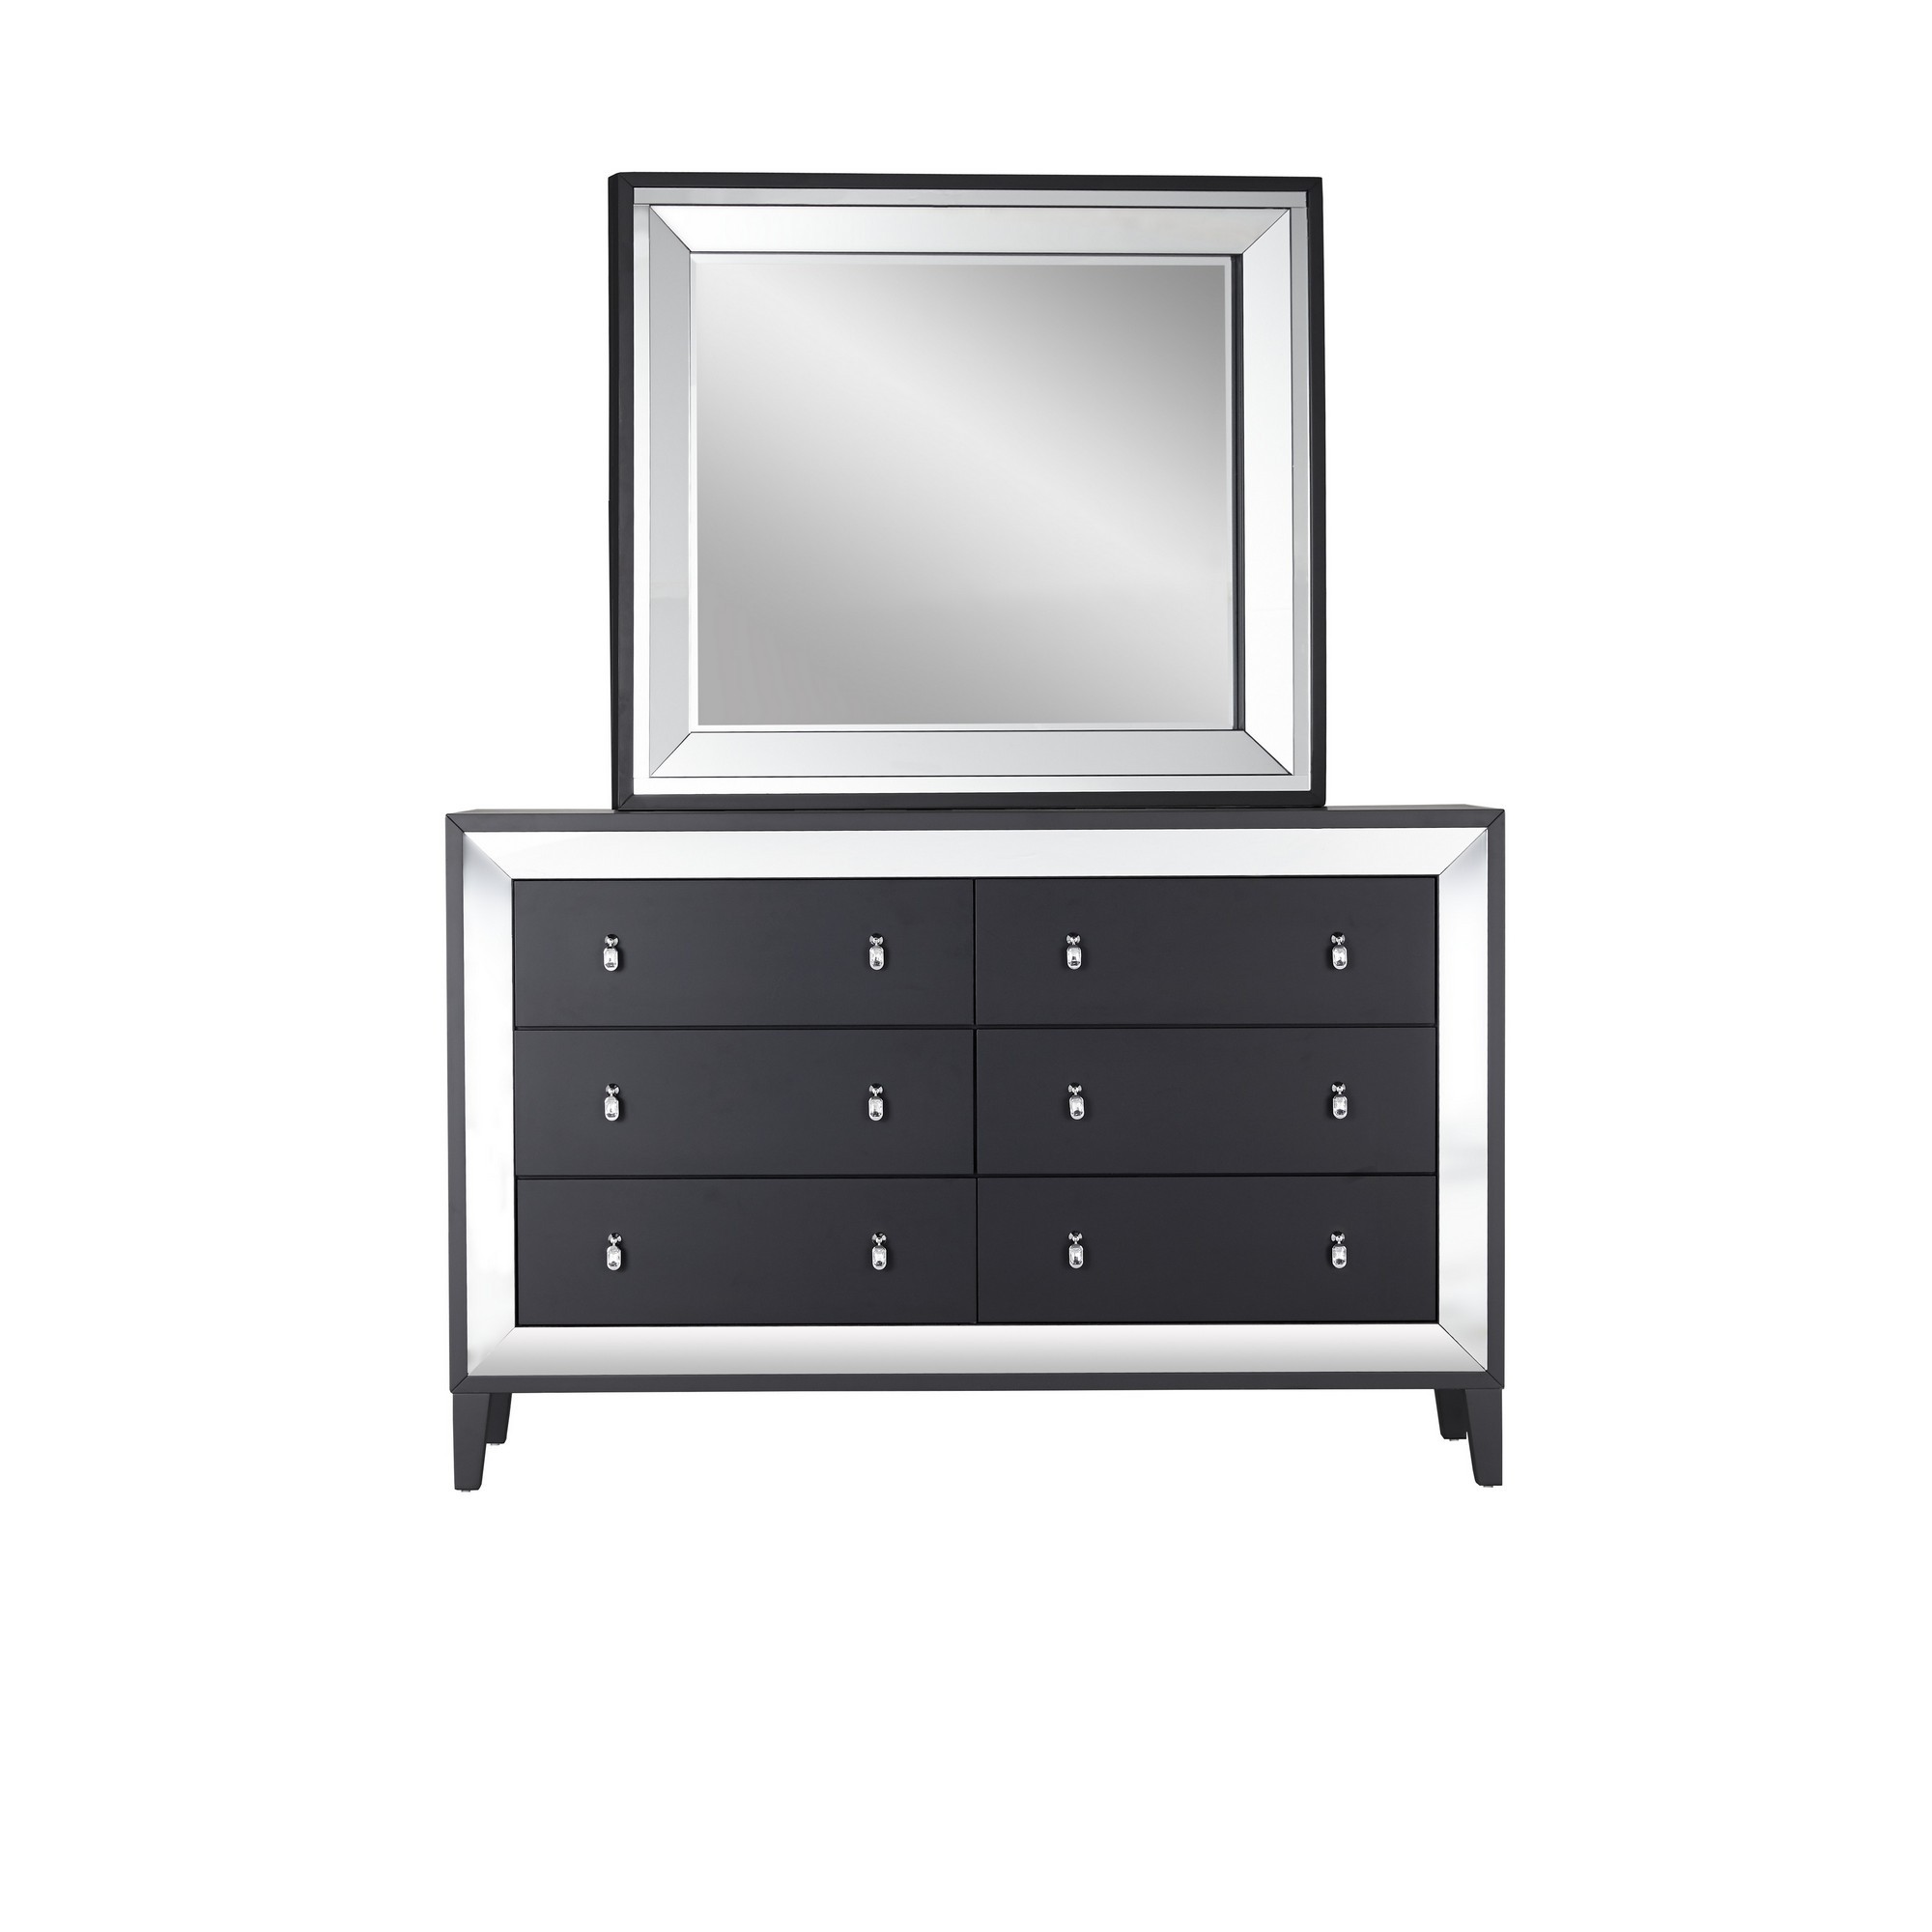 Luxurious Black Tone Dresser with Elegant Trim Mirror Accent 6 Drawers